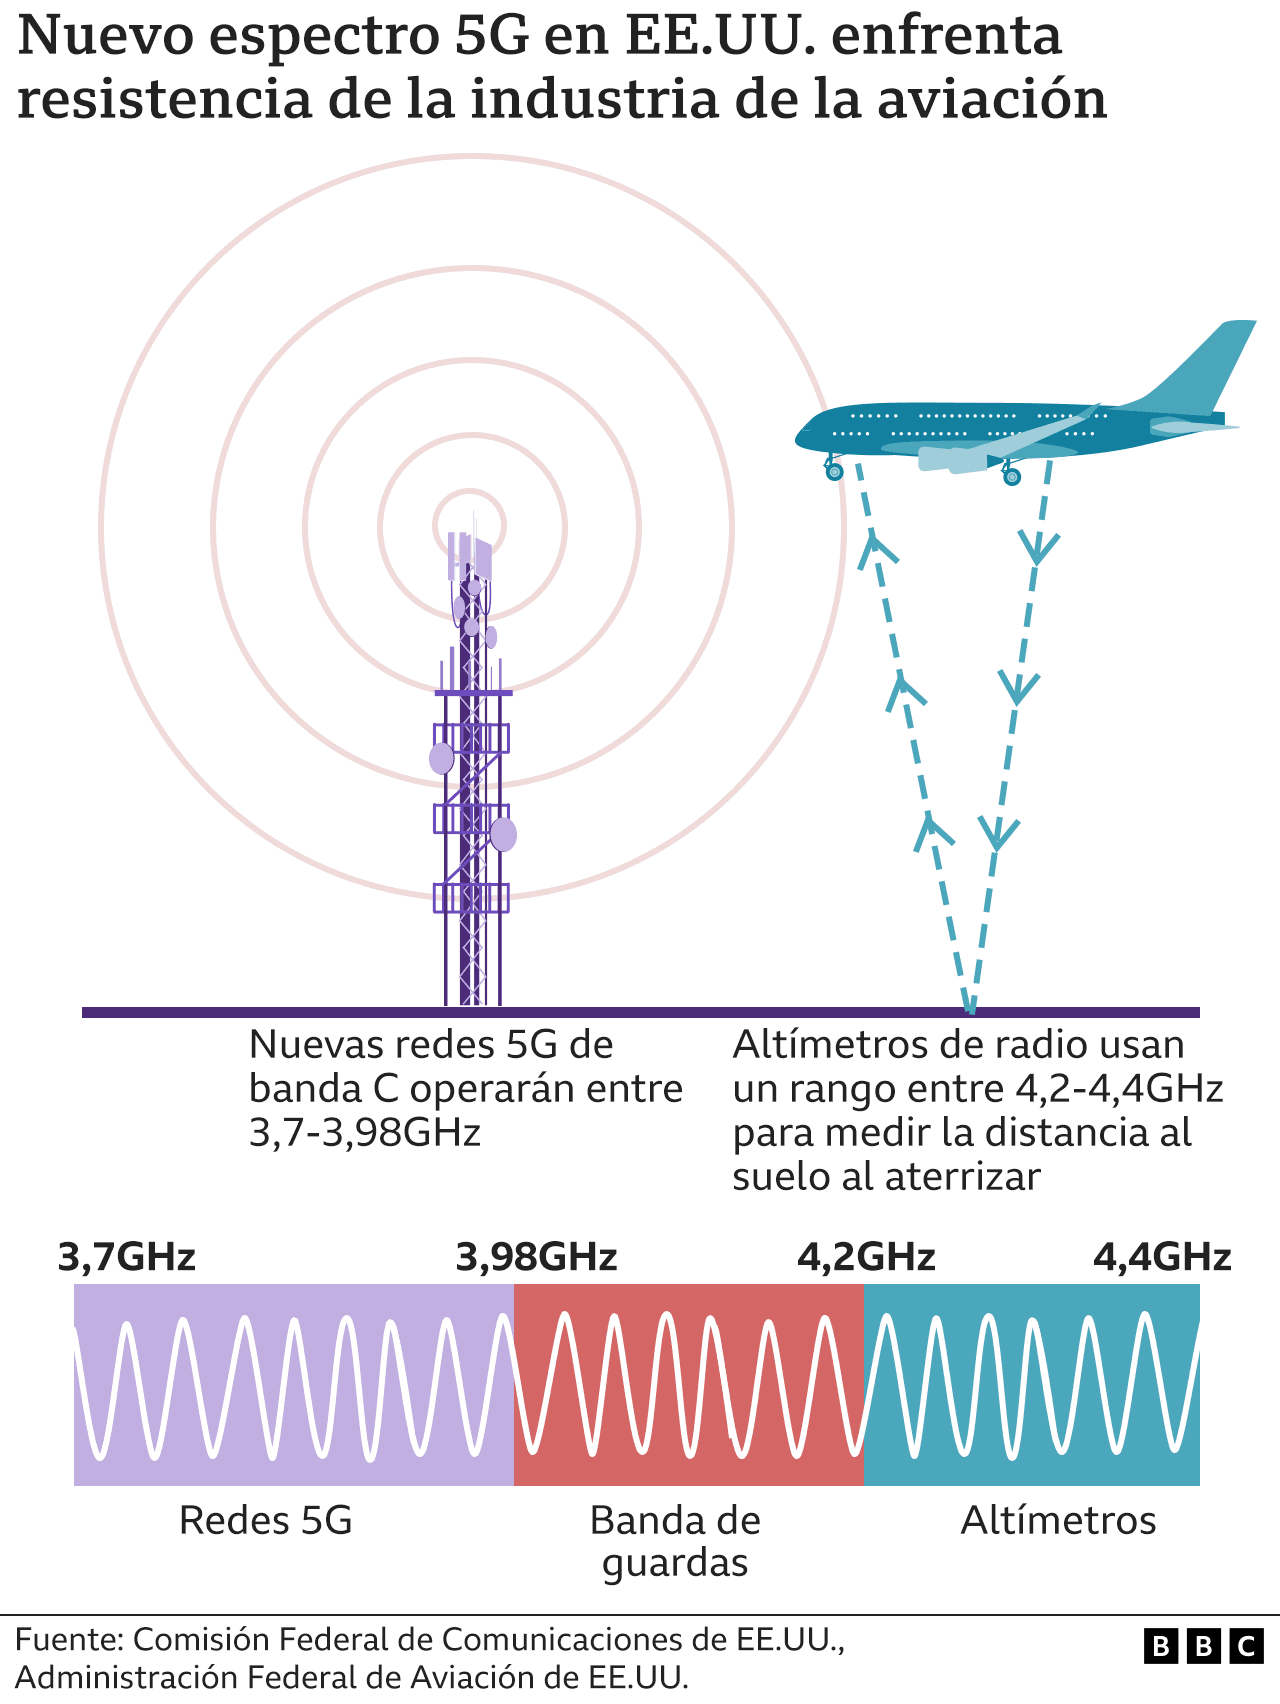 Illustration Explains How 5G Waves Affect Aircraft